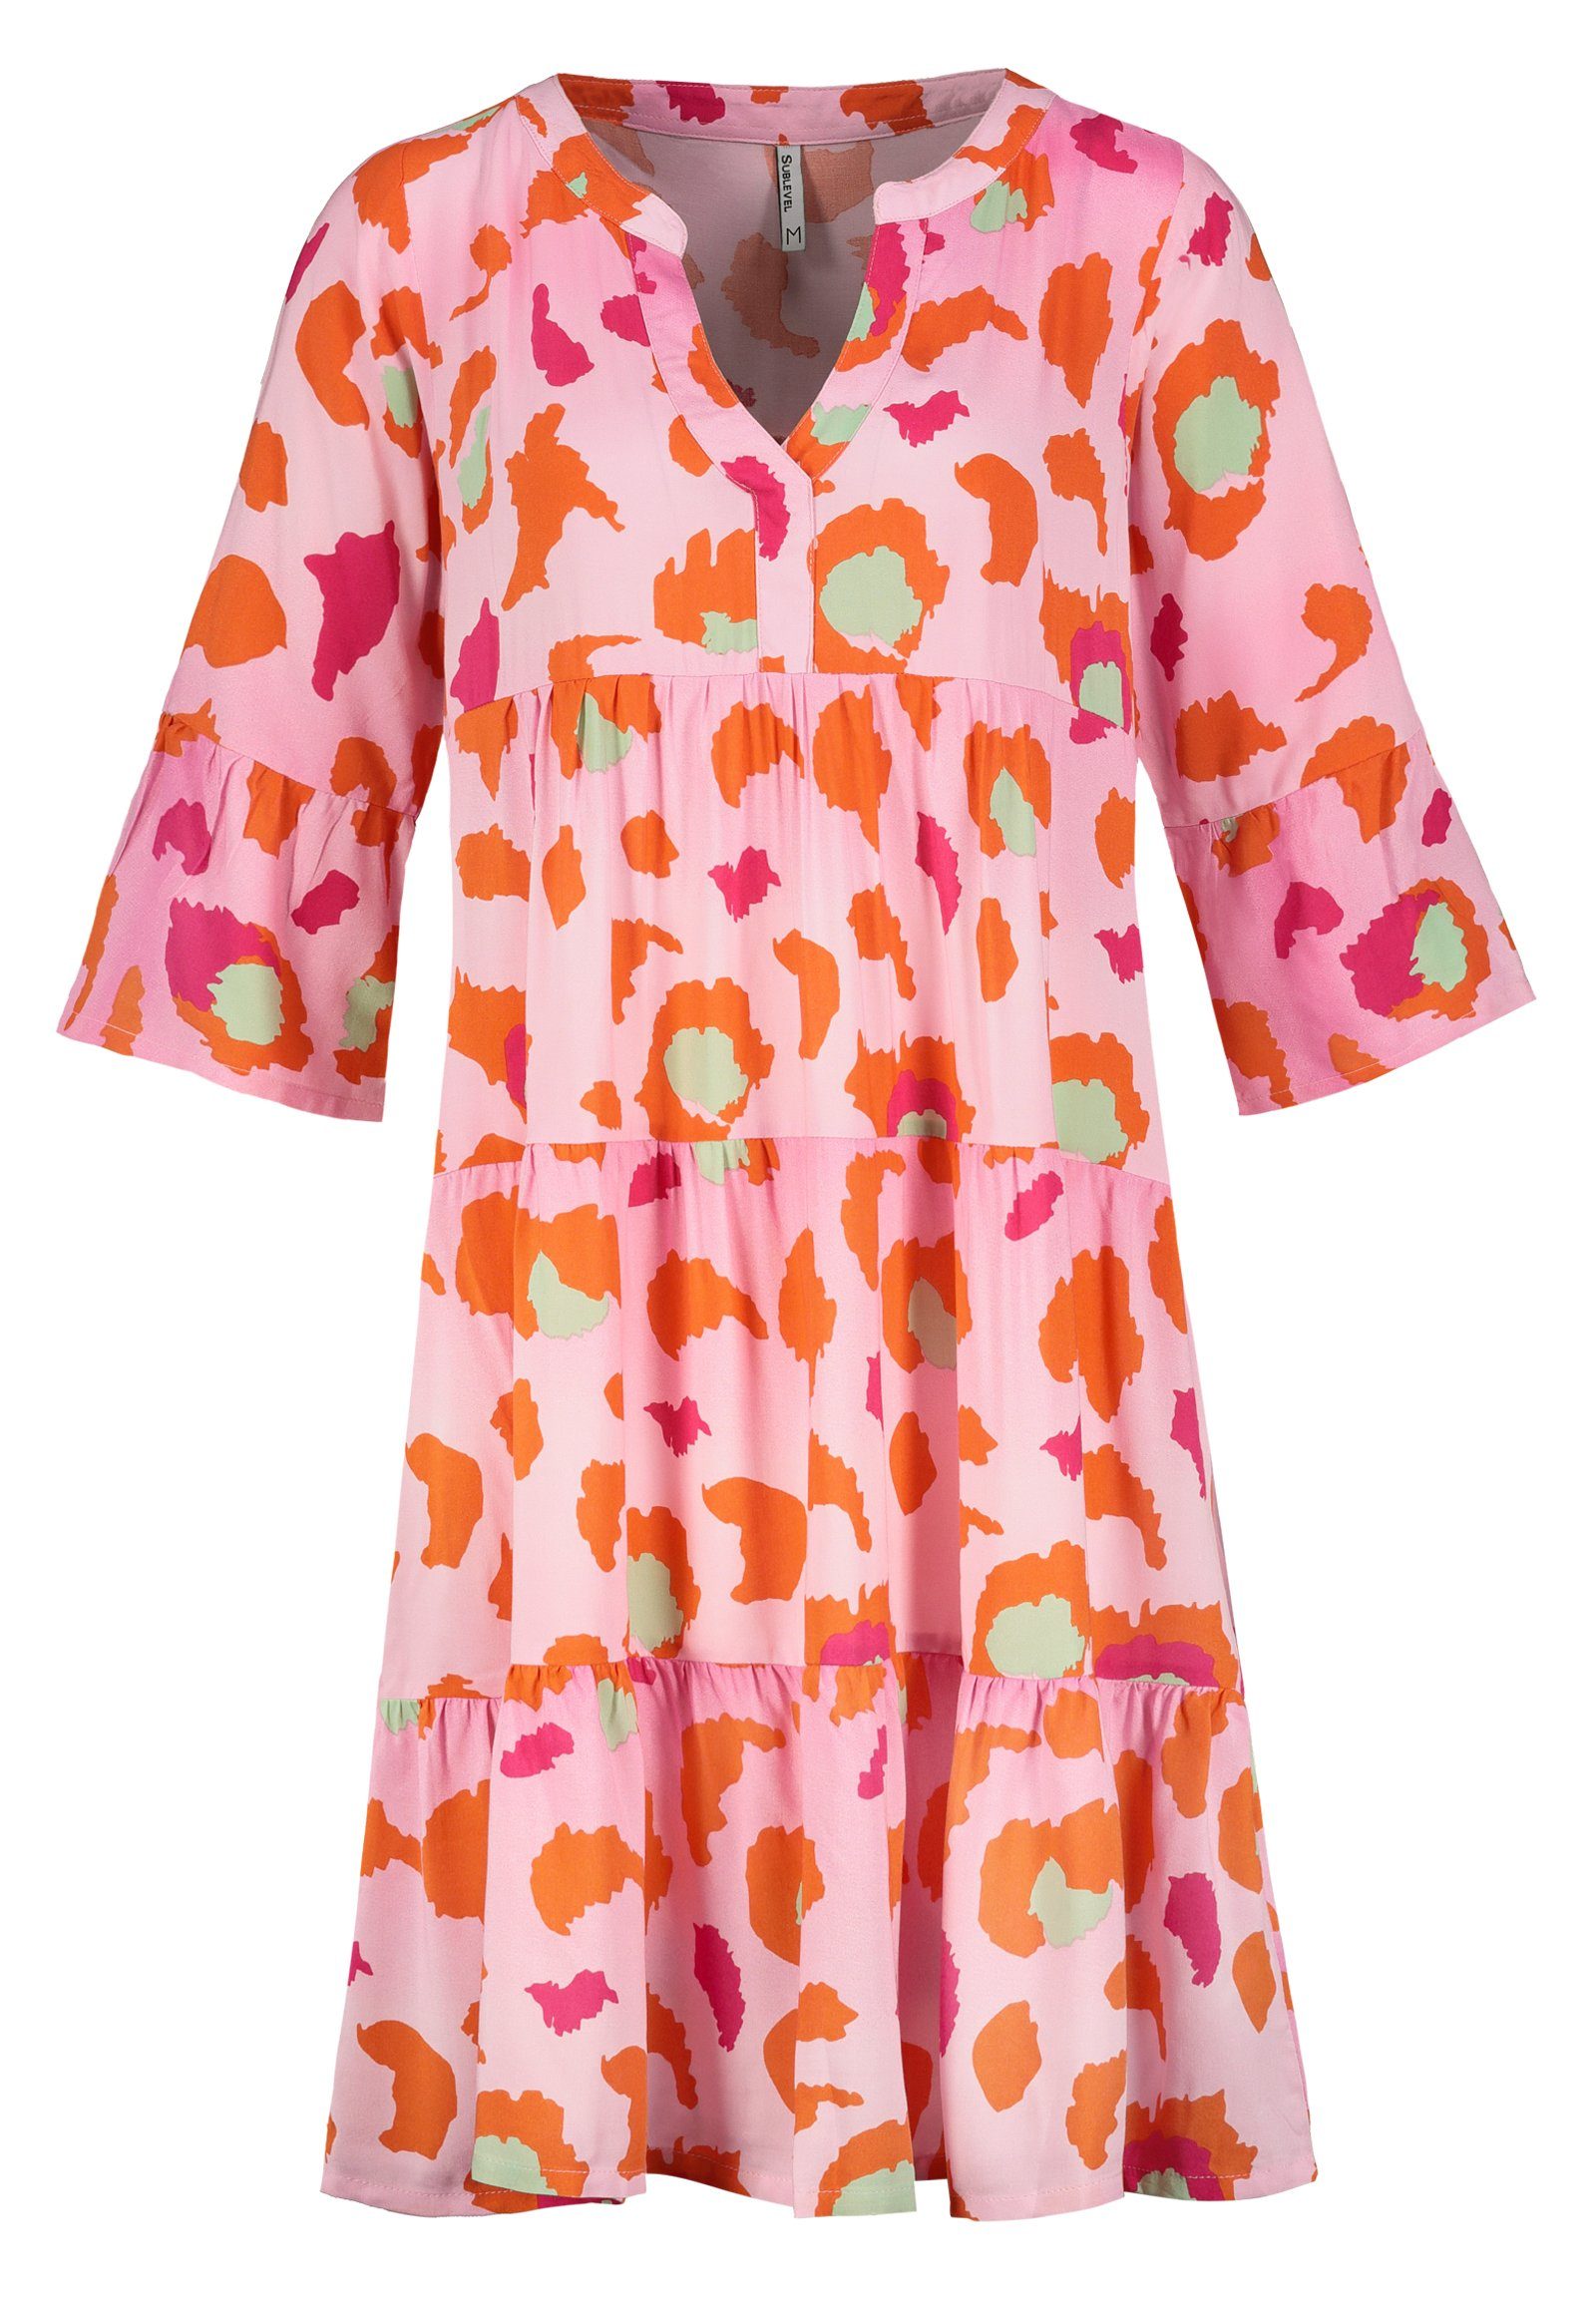 SUBLEVEL Strandkleid Sublevel Damen Kleid Strandkleid Sommerkleid 100% Viskose MIT VOLANTS middle pink design 01